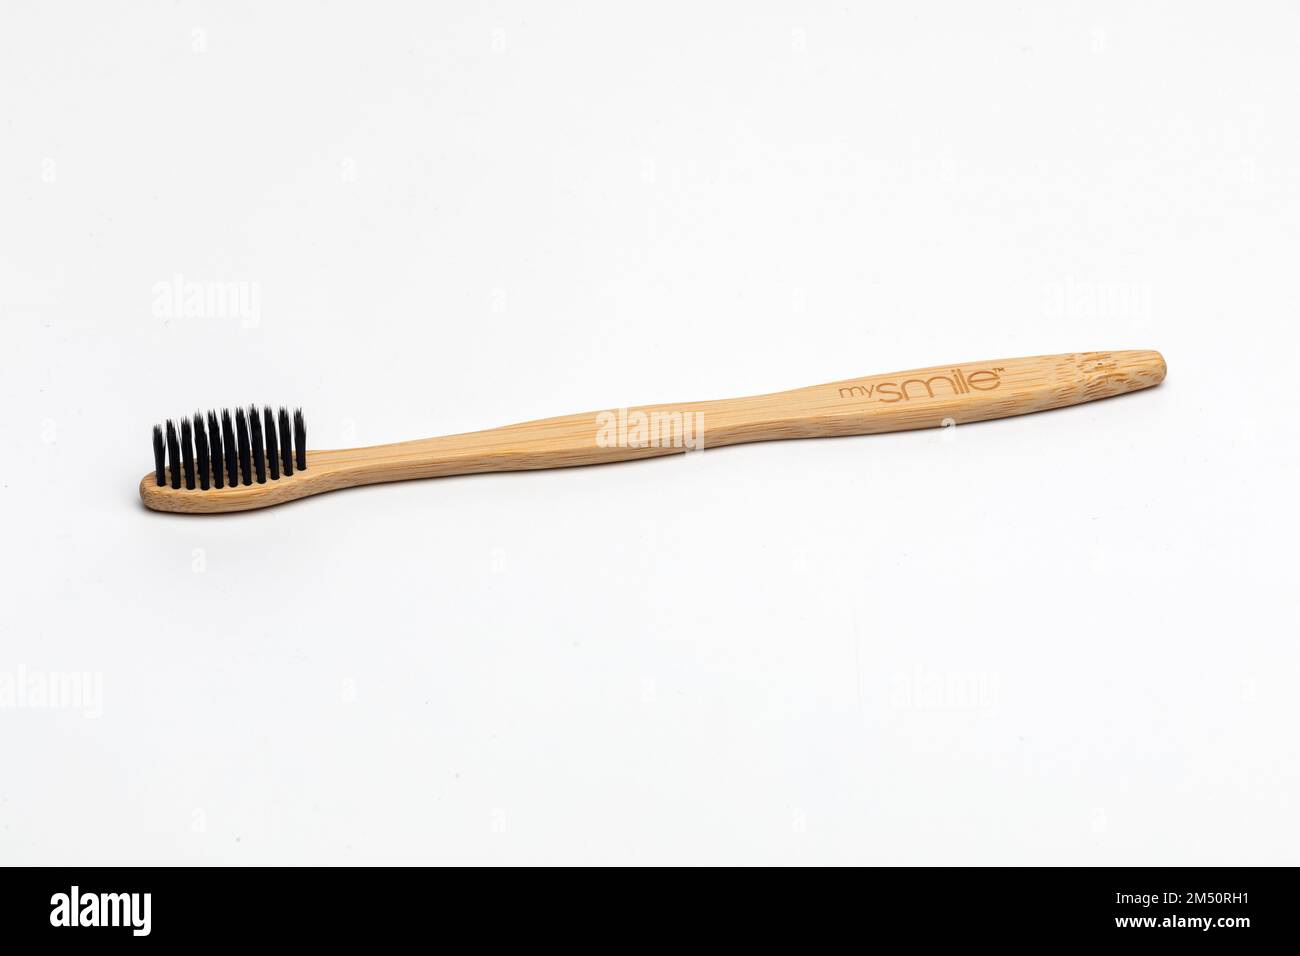 A mysmile teeth whitening bamboo tooth brush Stock Photo